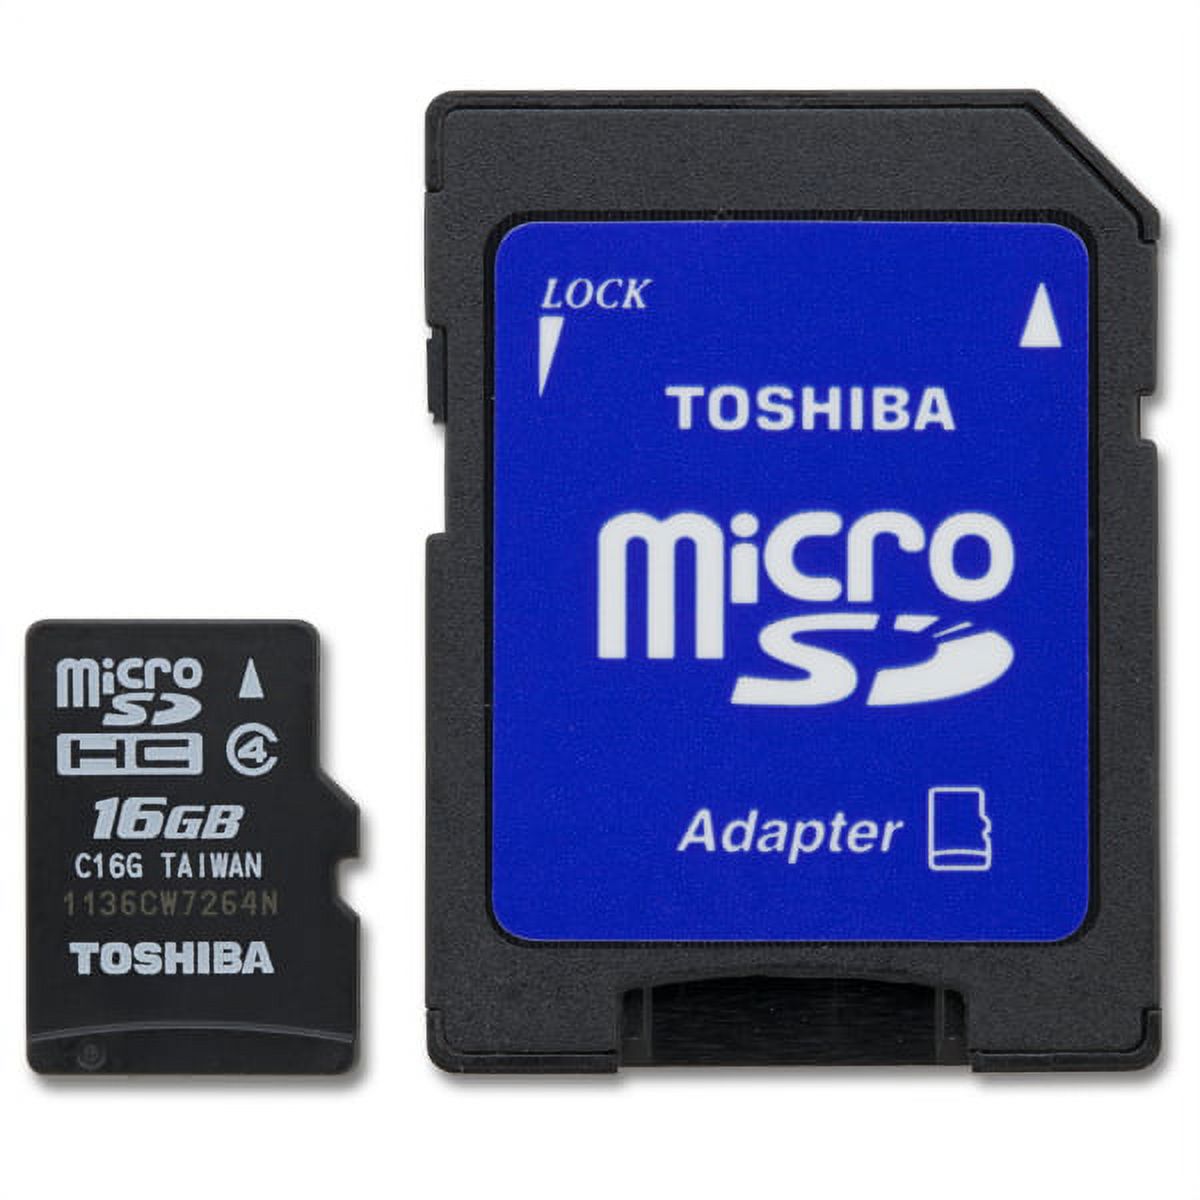 Toshiba 8 GB Class 4 microSDHC - image 2 of 2